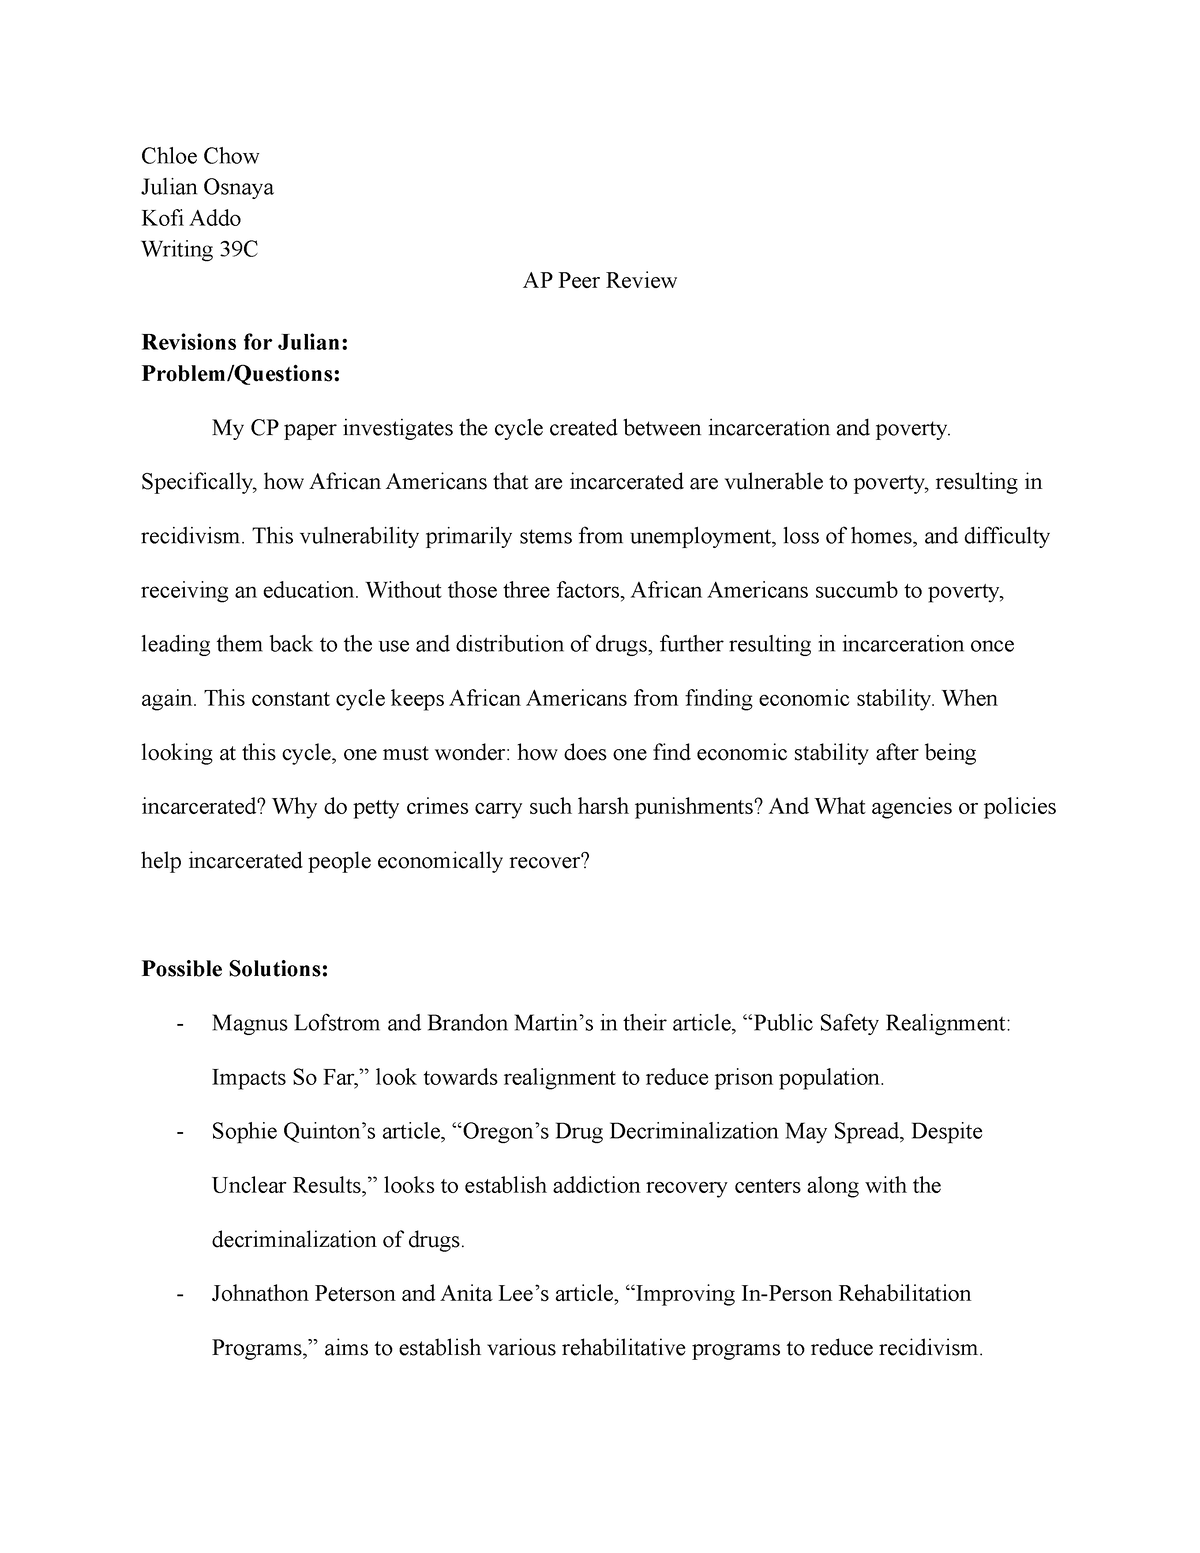 Ap Friday Peer Review Chloe Chow Julian Osnaya Kofi Addo Writing 39c Ap Peer Review Revisions